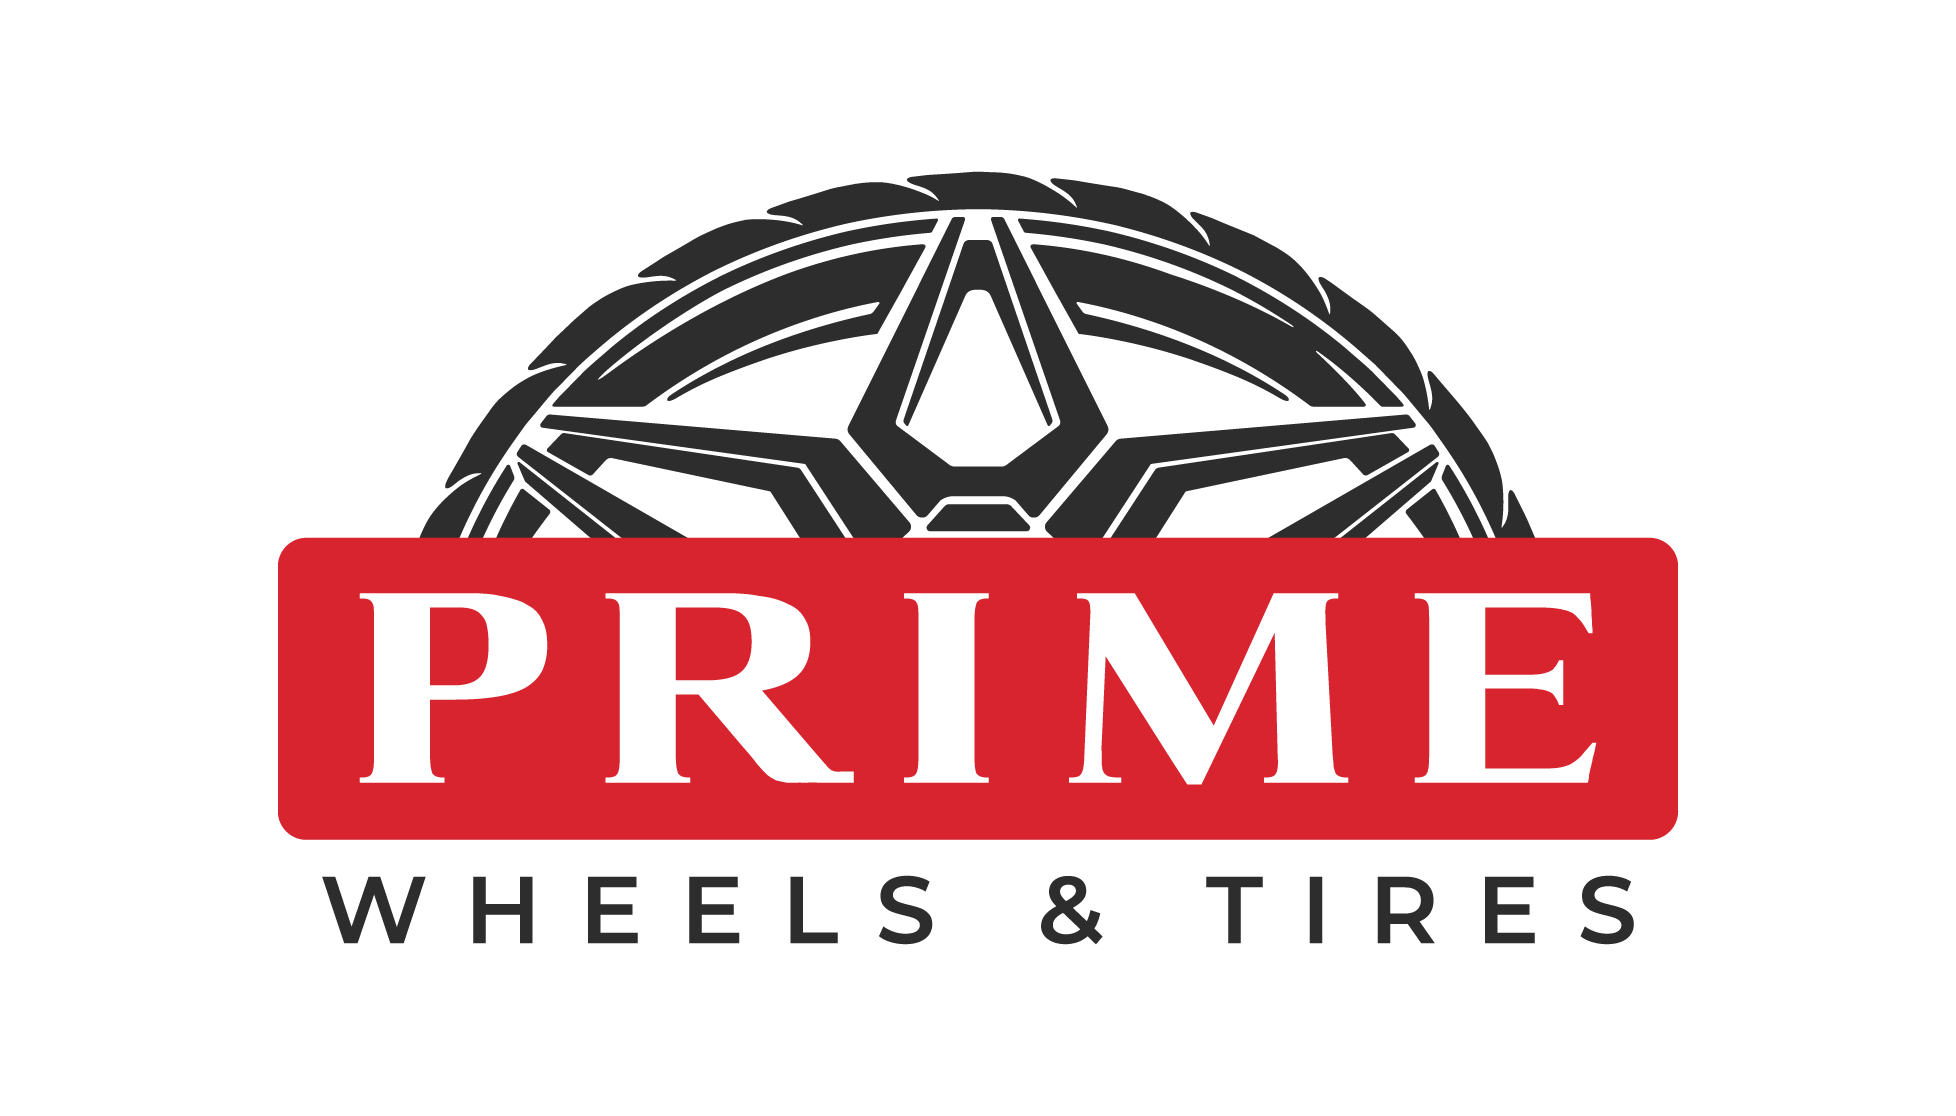 Prime Wheels